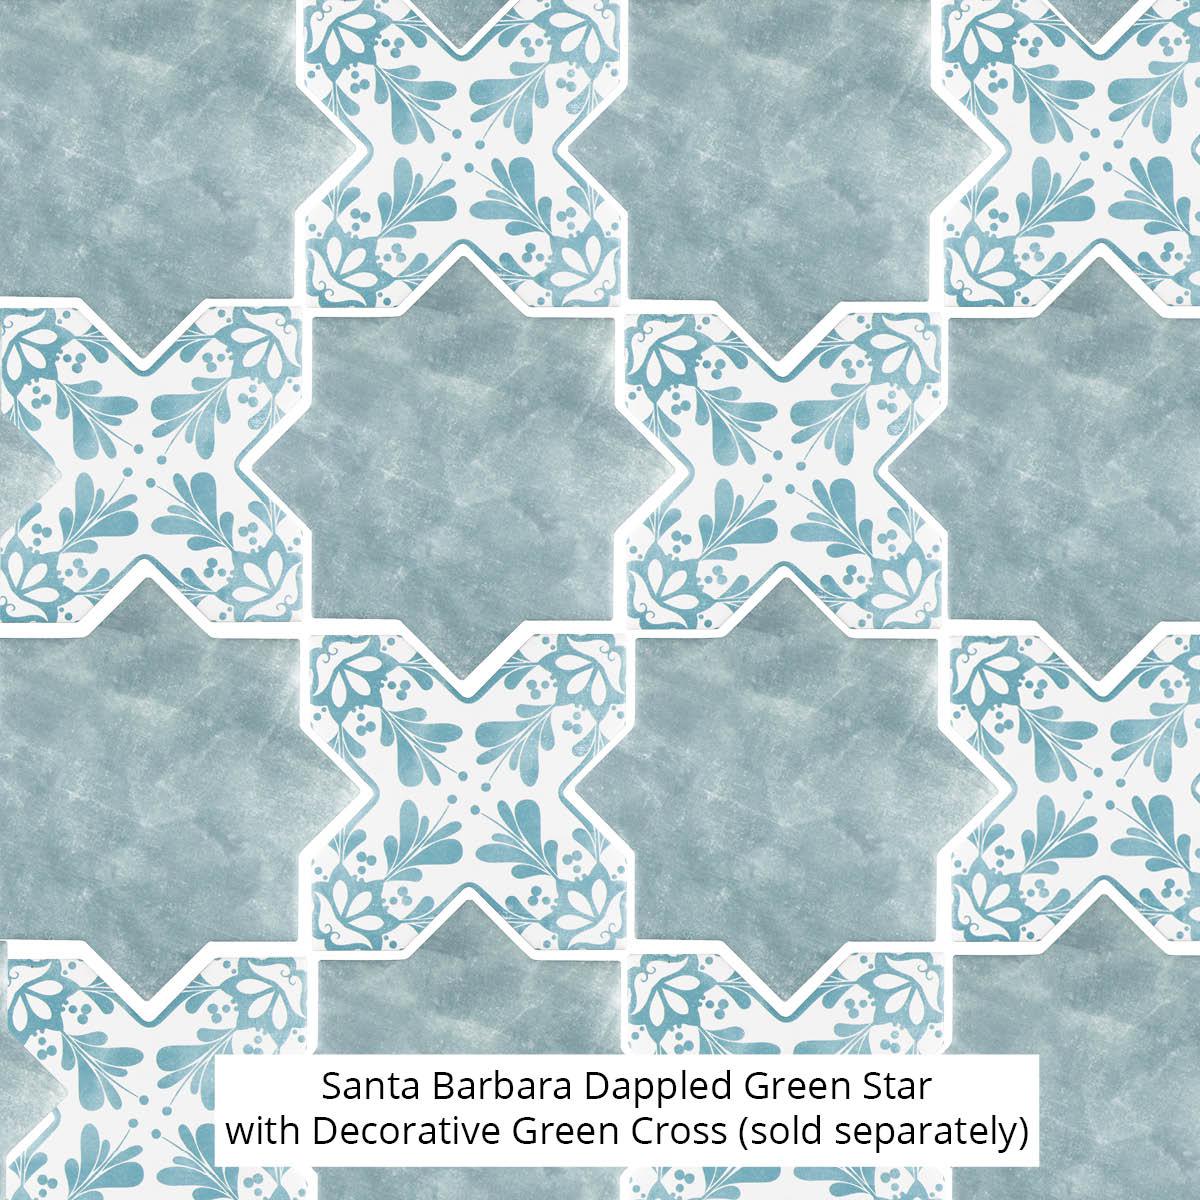 Santa Barbara Dappled Green Decorative Cross | Star and Cross Pattern Tile